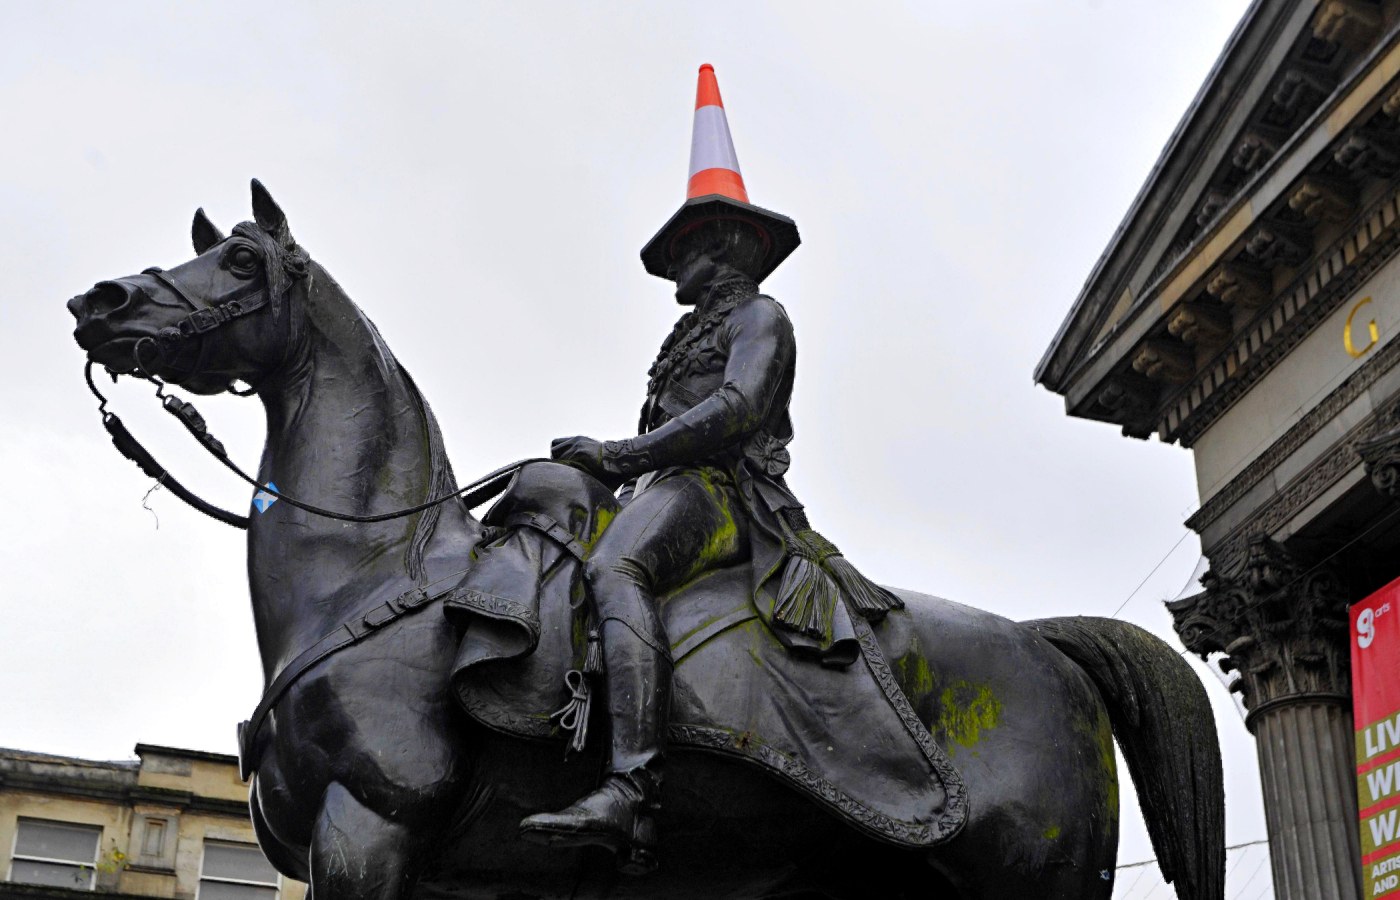 Glasgow's iconic Duke of Wellington statue.